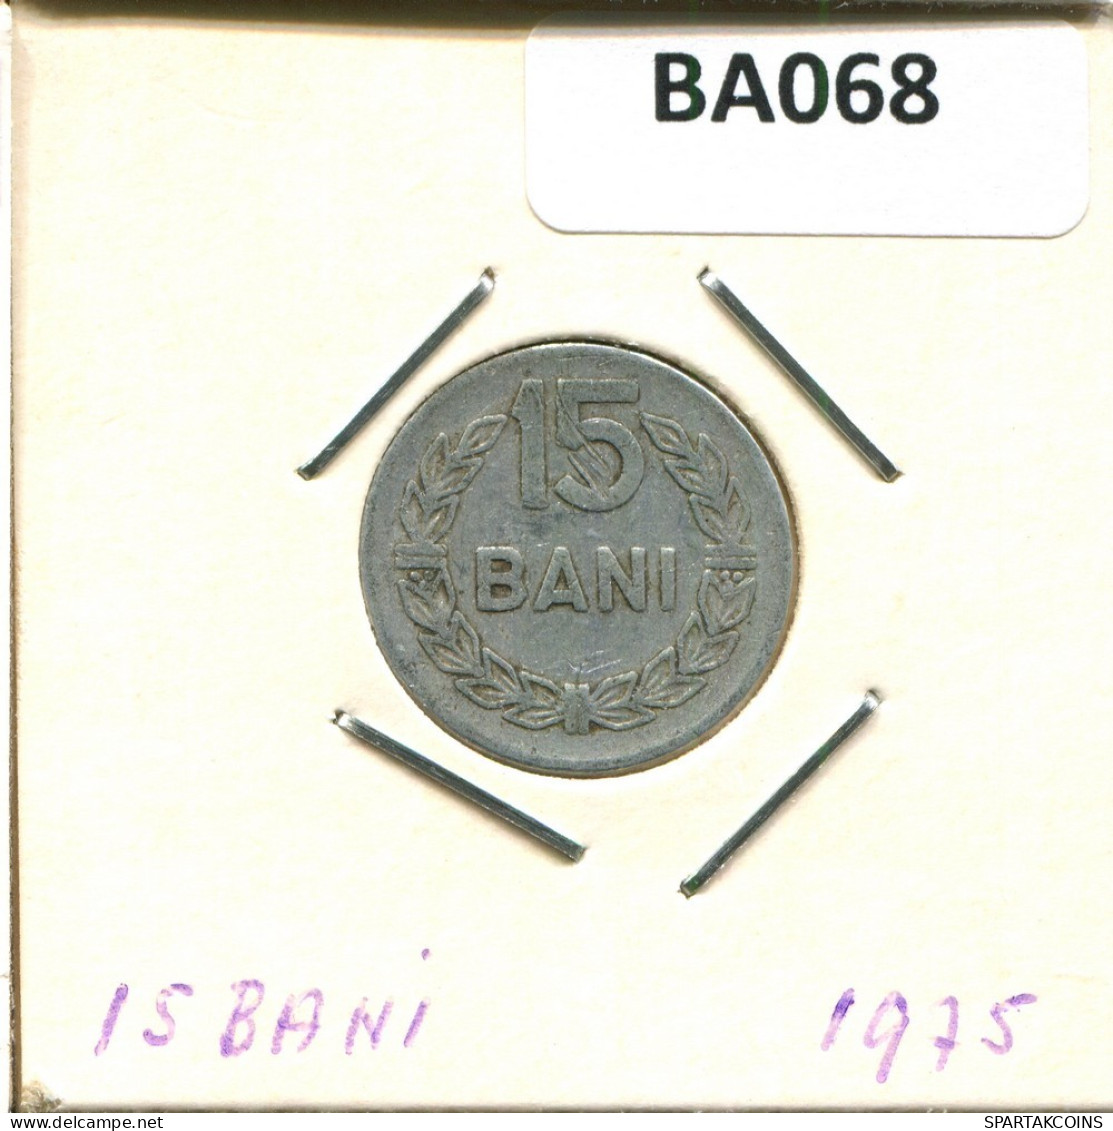 15 BANI 1975 RUMÄNIEN ROMANIA Münze #BA068.D.A - Roemenië